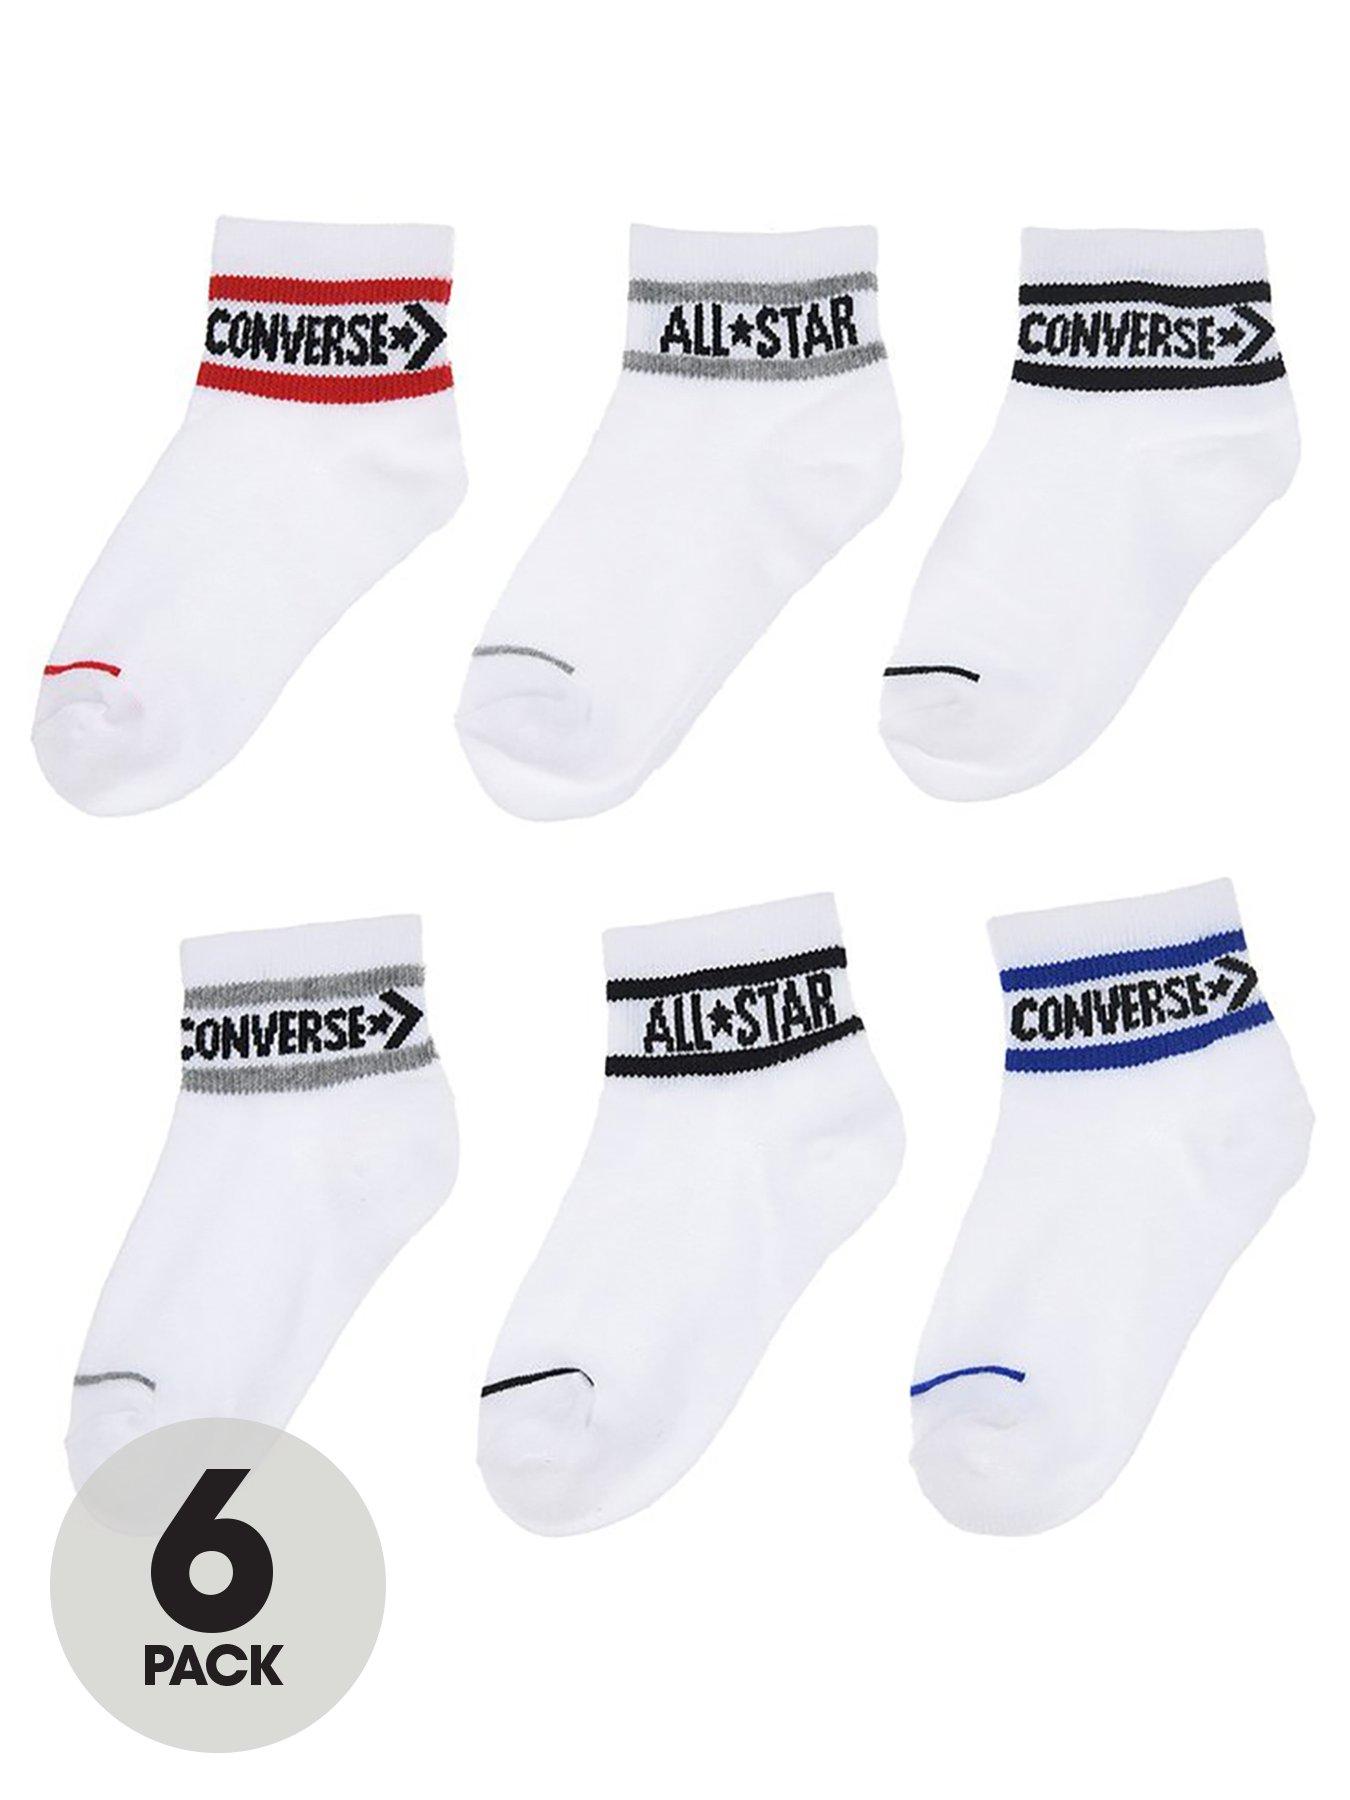 Official Store • Kids Socks White - Converse At Older 6pk Wordmark Ankle